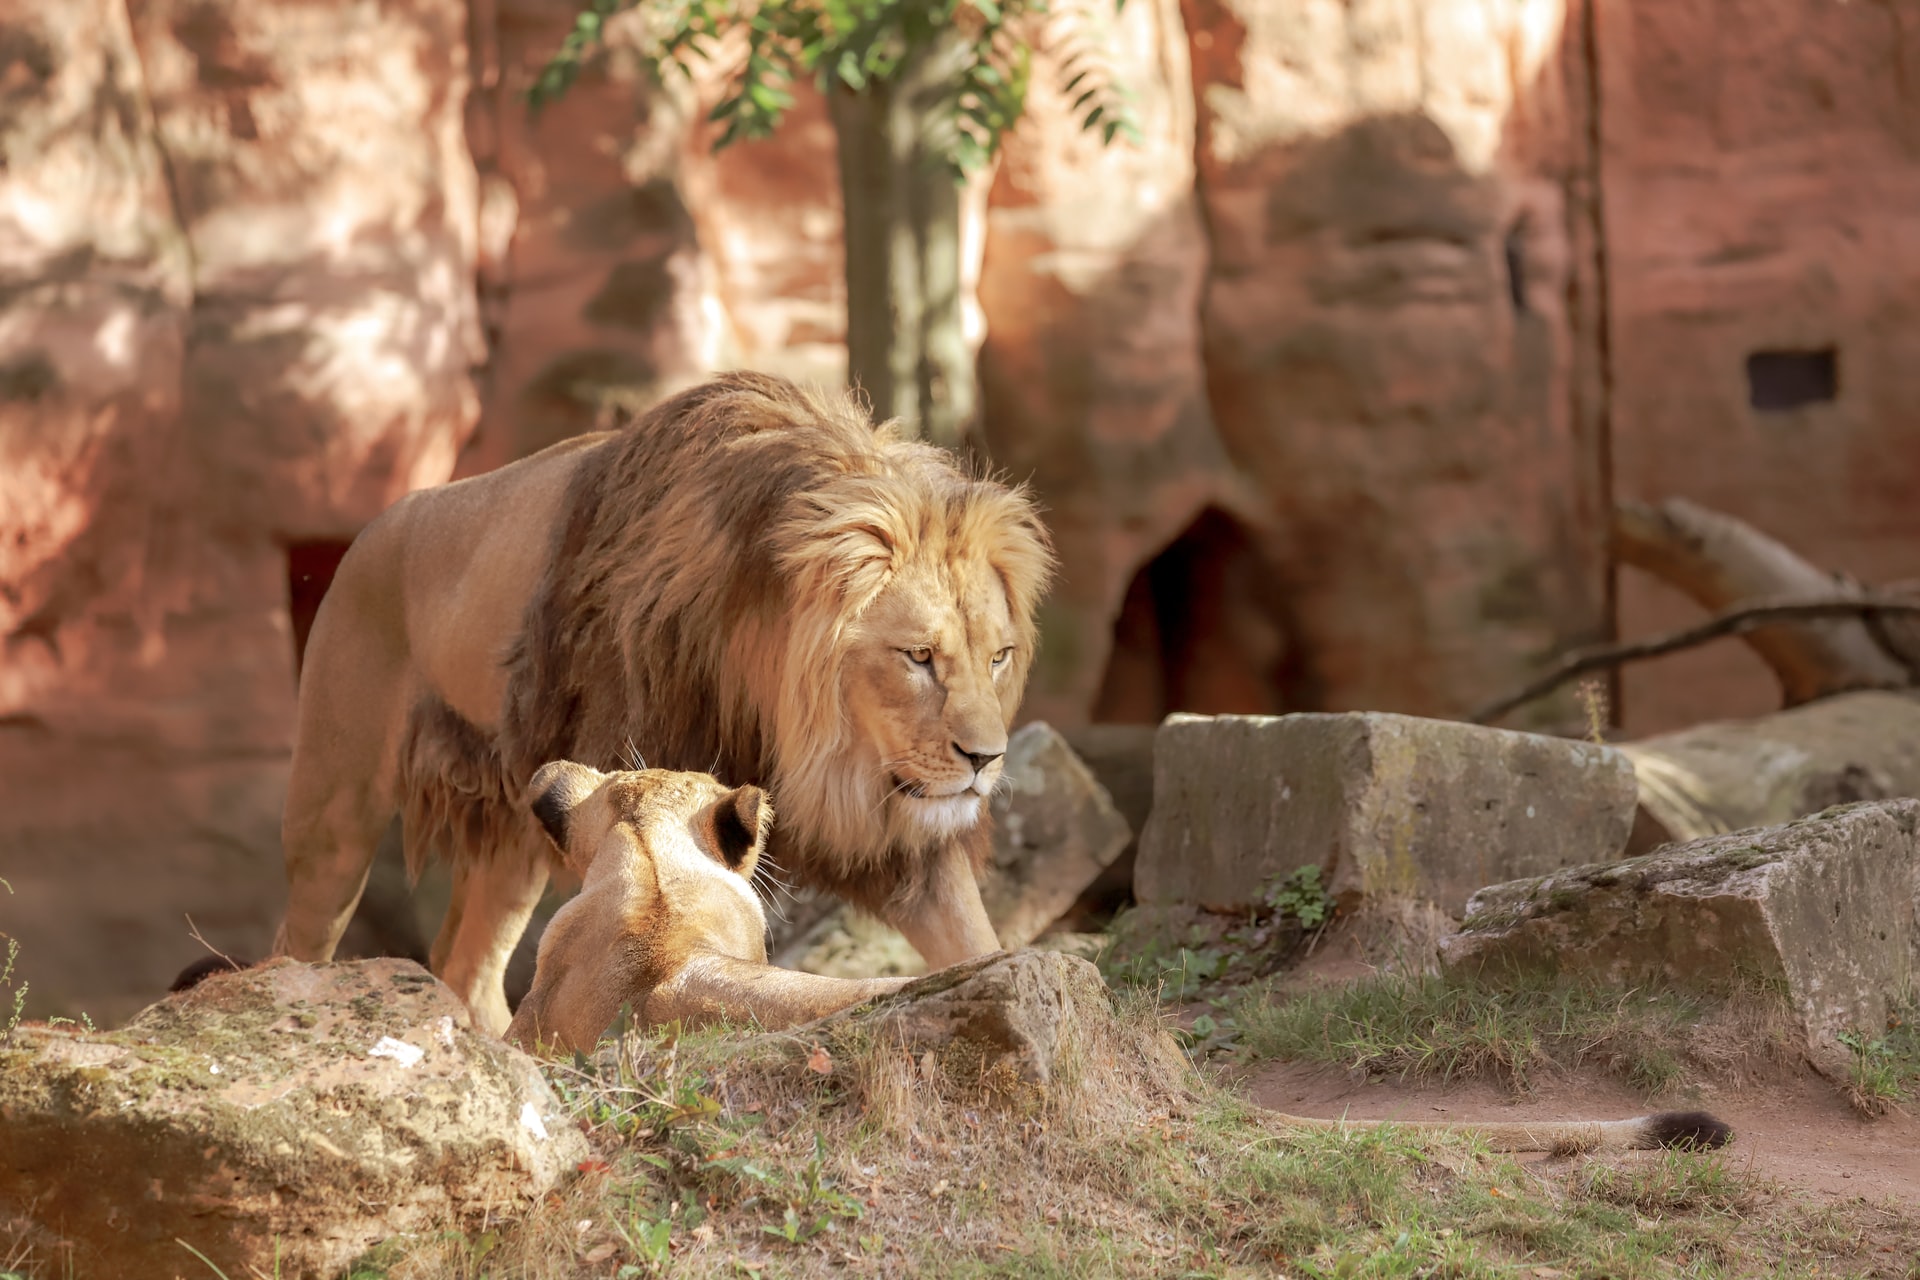 Smithsonian National Zoo: Take a Walk on the Wild Side